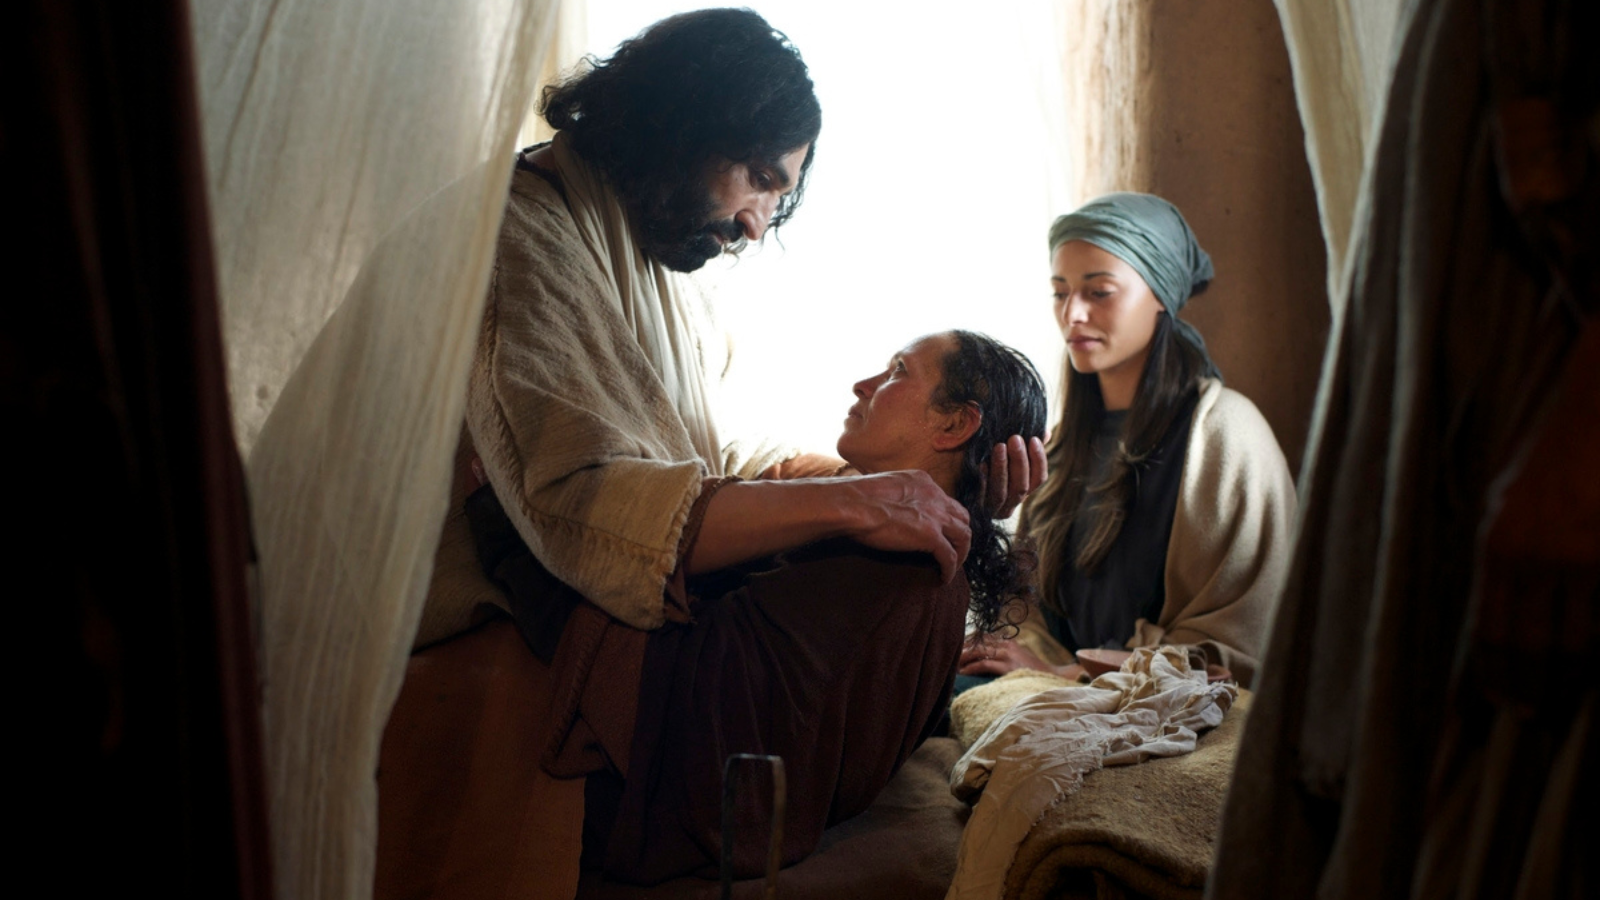 An image of jesus helping people.